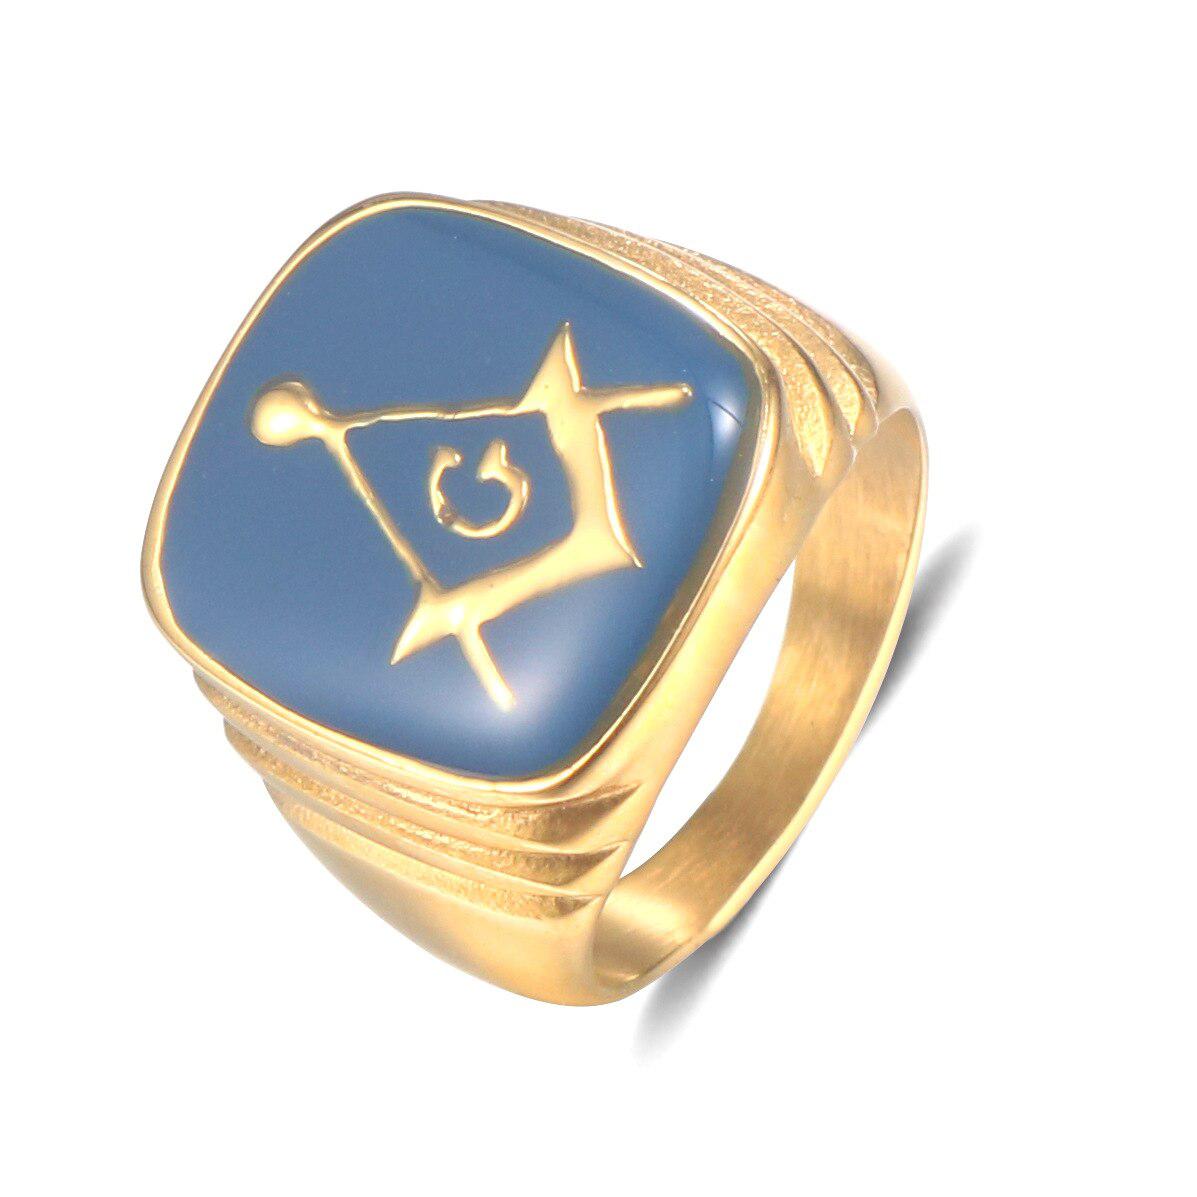 Master Mason Antique Red Masonic Ring - Masonic Jewelry-rings-Masonic Makers